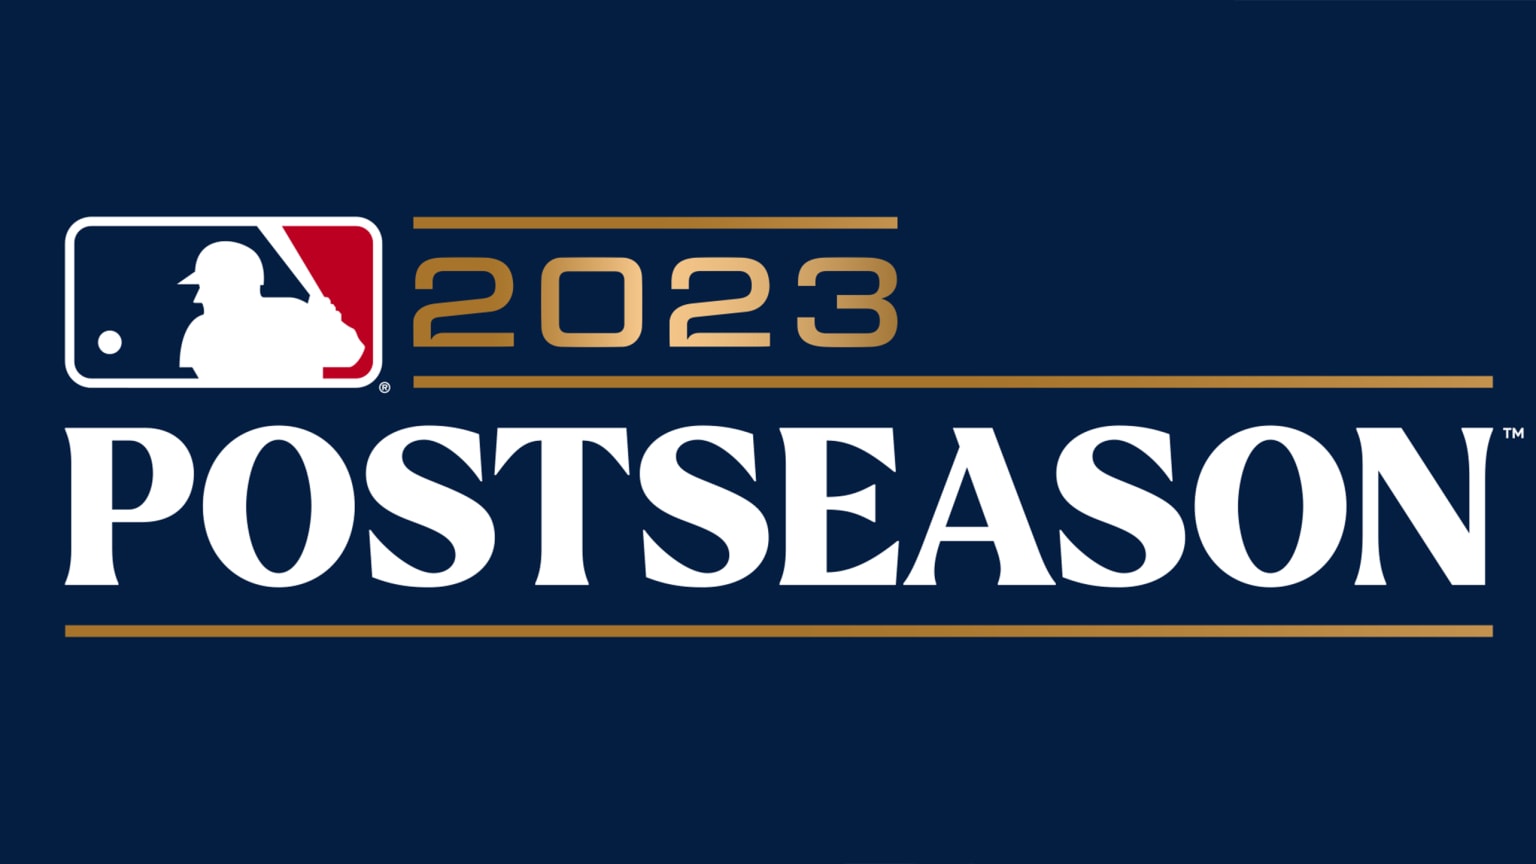 MLB anuncia un calendario más equilibrado para temporada 2023  Z 101  Digital